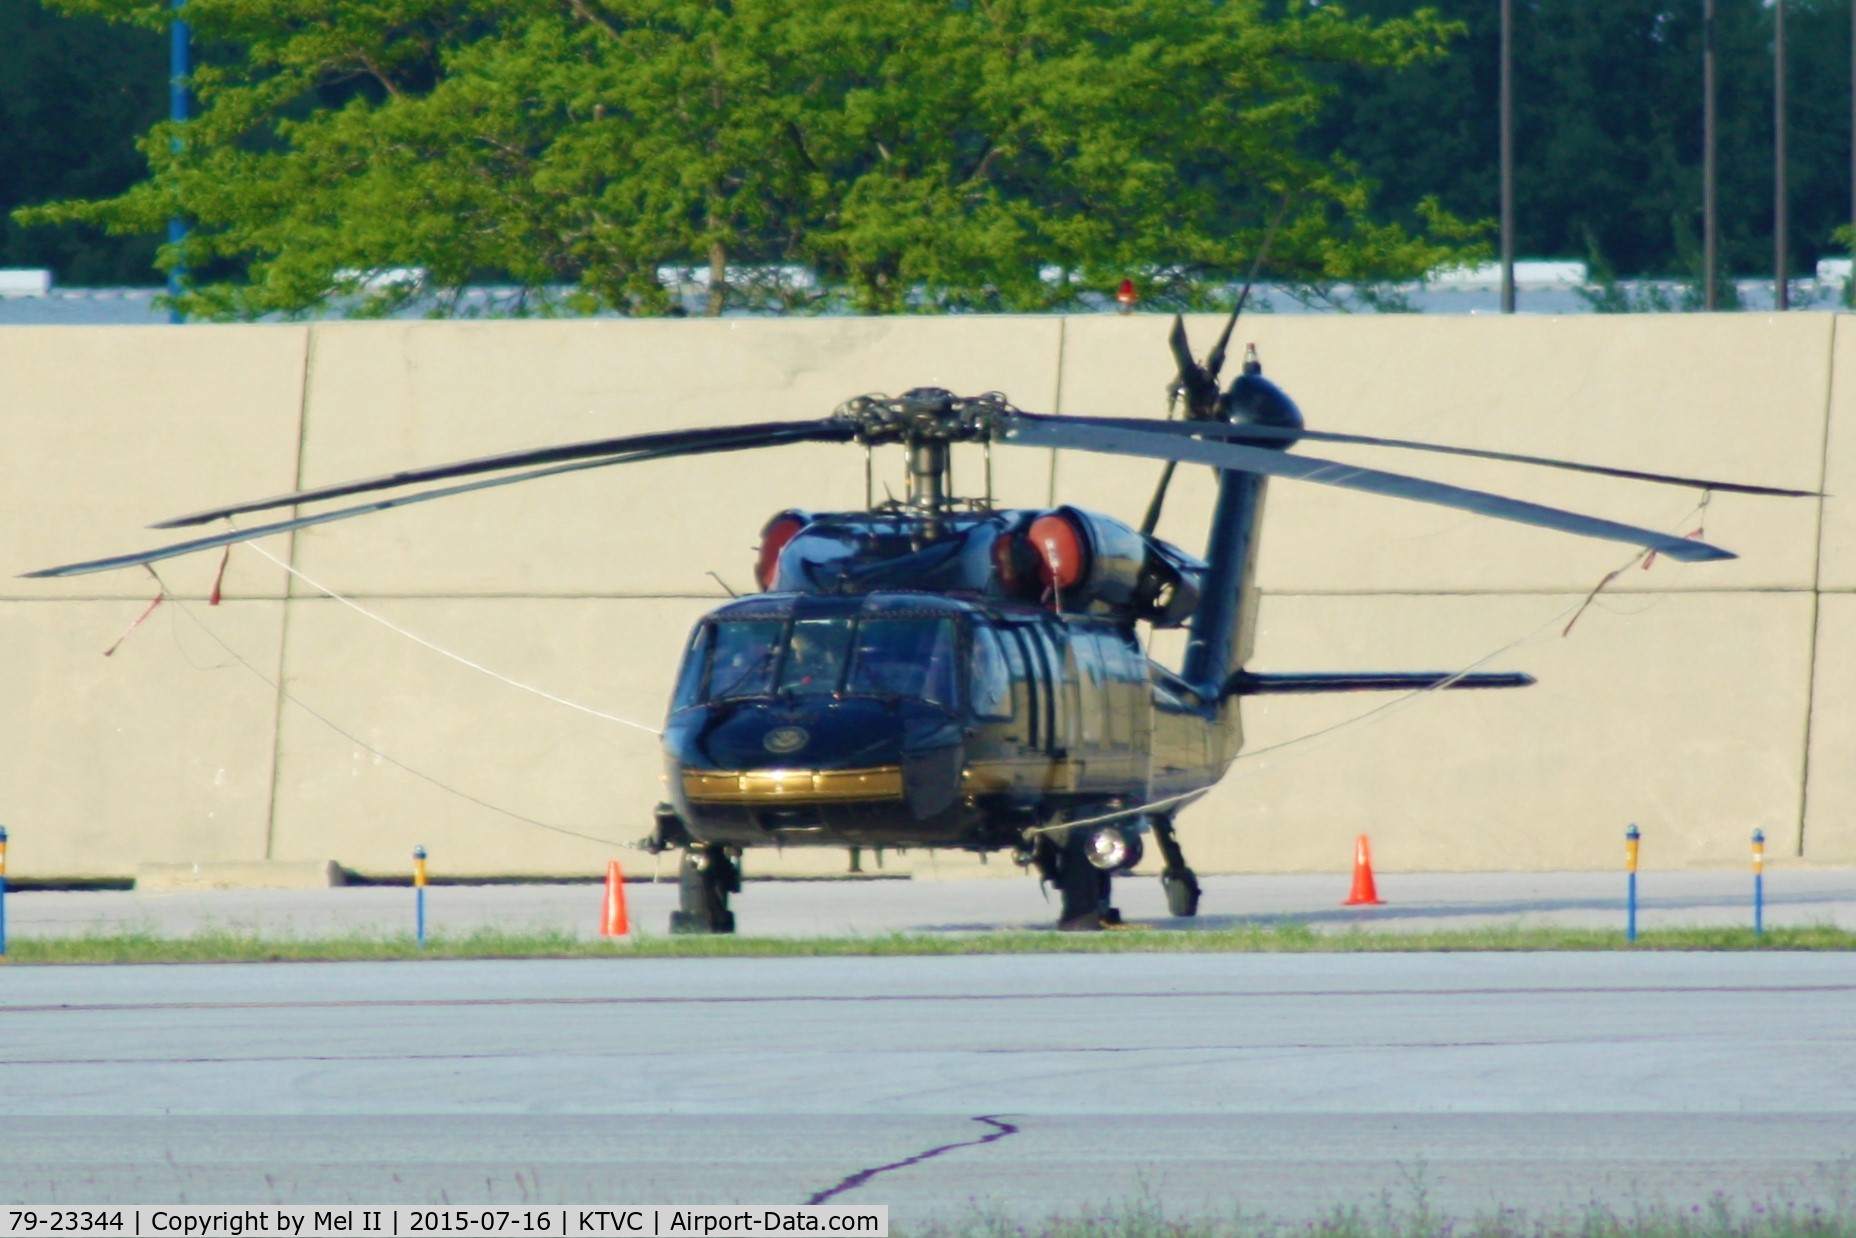 79-23344, 1979 Sikorsky UH-60A Black Hawk C/N 70.0161, US Customs and Border Patrol. Parked.